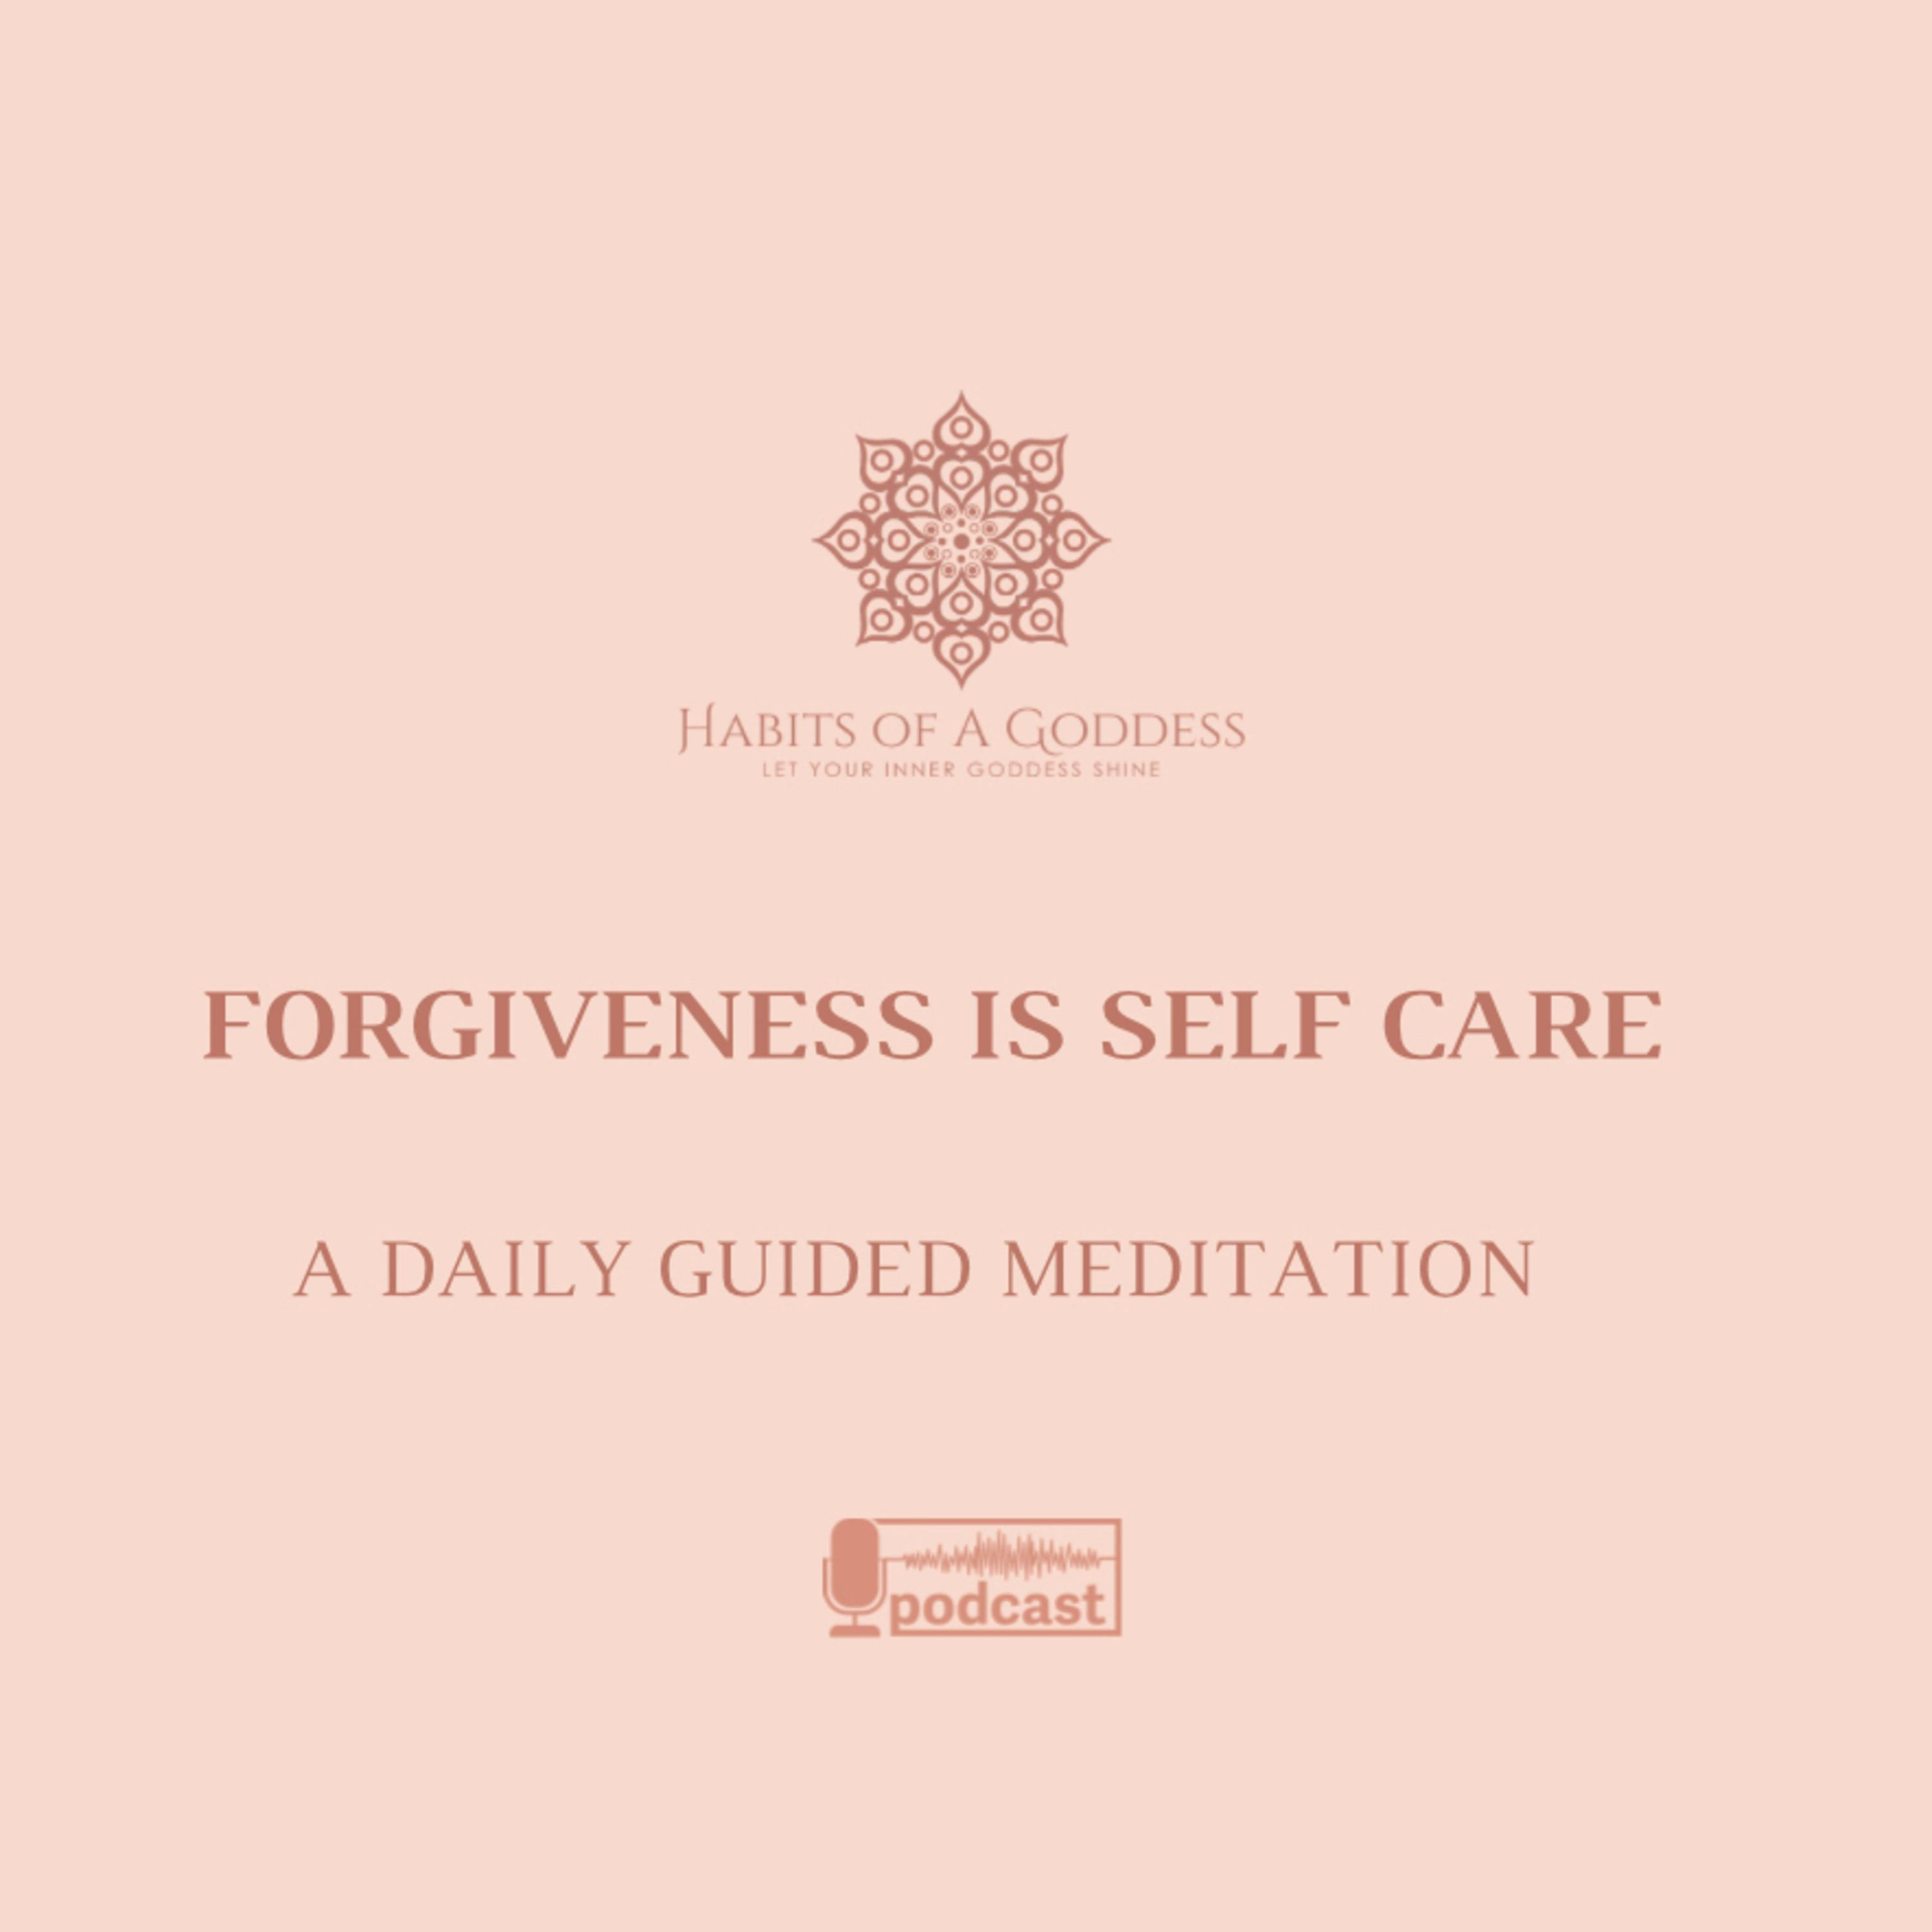 FORGIVENESS IS SELF CARE | HABITS OF A GODDESS